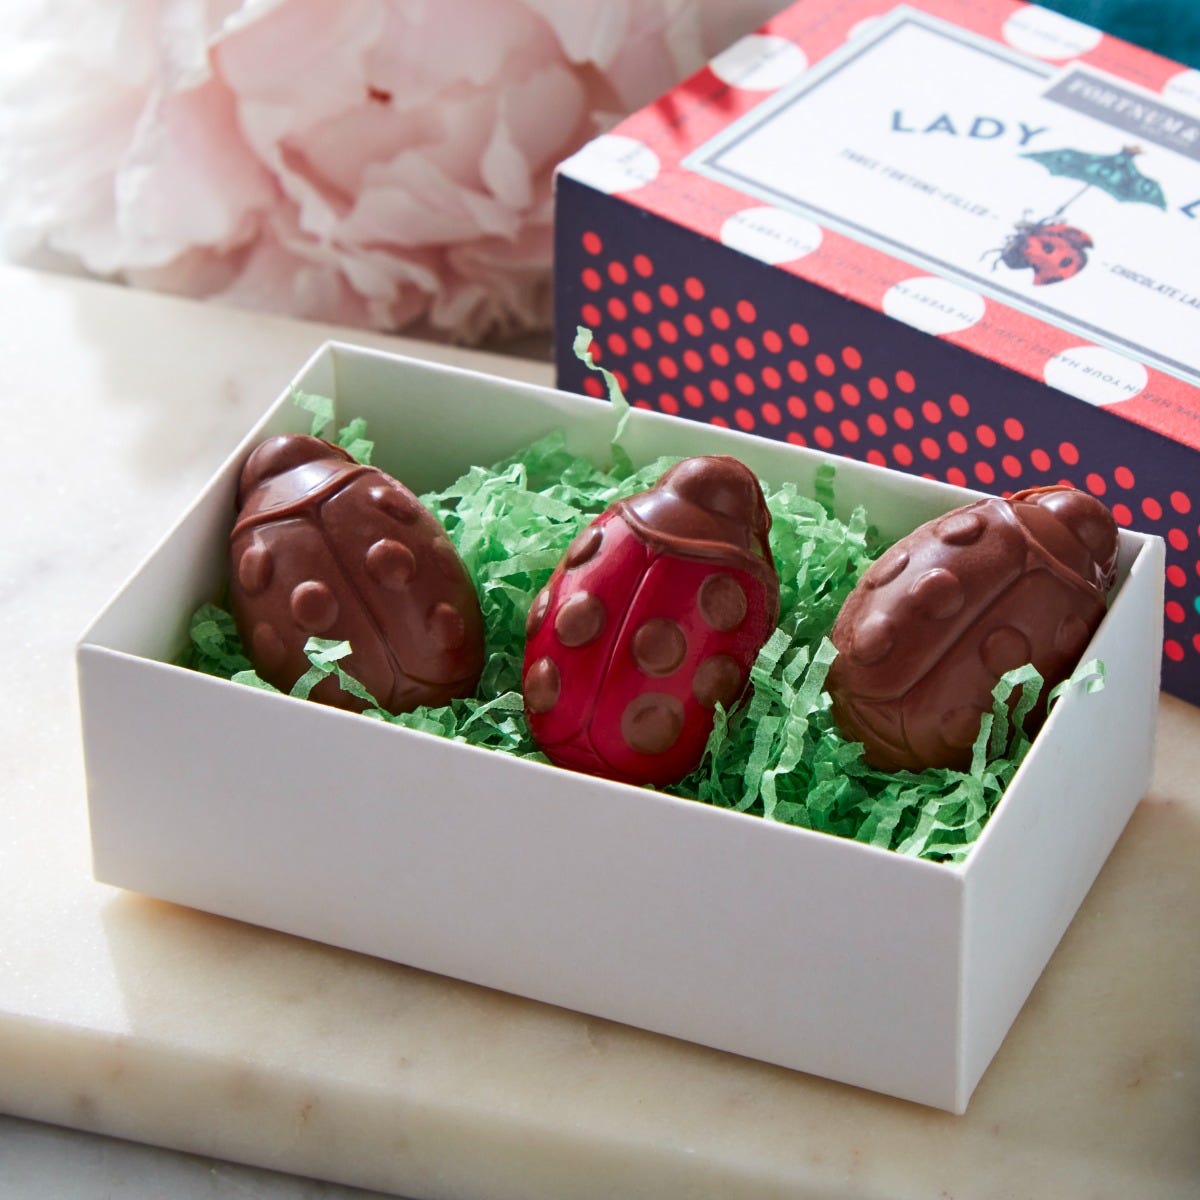 Lady Luck Chocolate Ladybird Matchbox, 33g, Fortnum & Mason